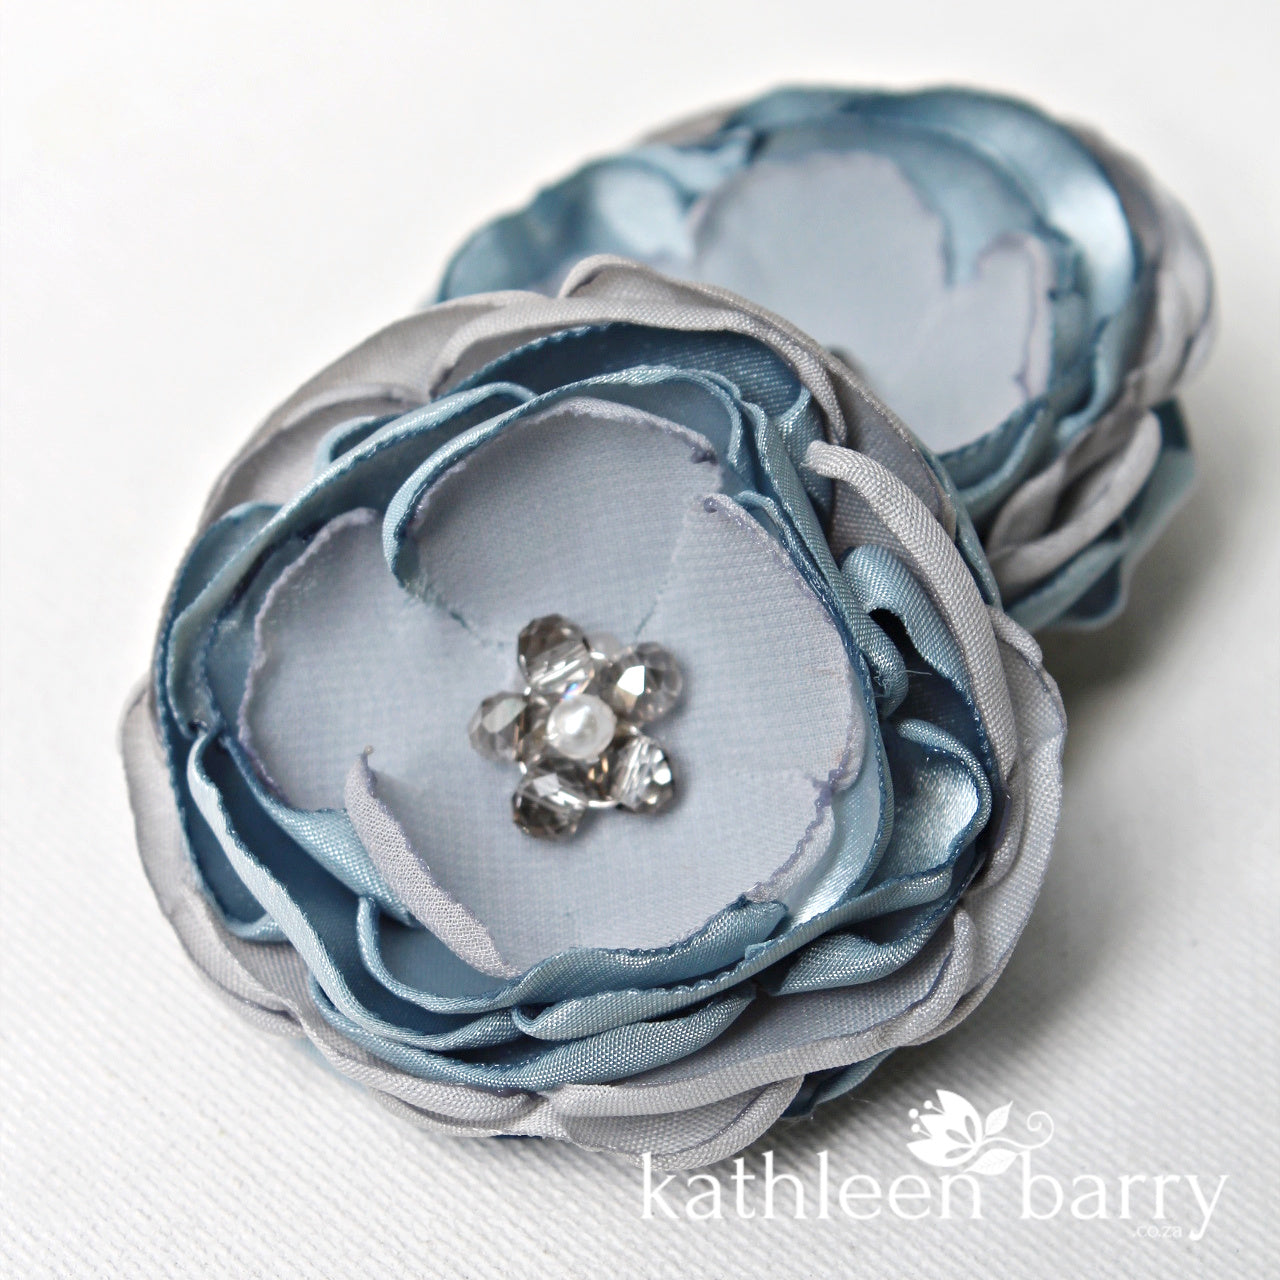 Dusty blue hair flower or brooch - Bride, flower girl, bridesmaid, mother of the bride or groom gifts